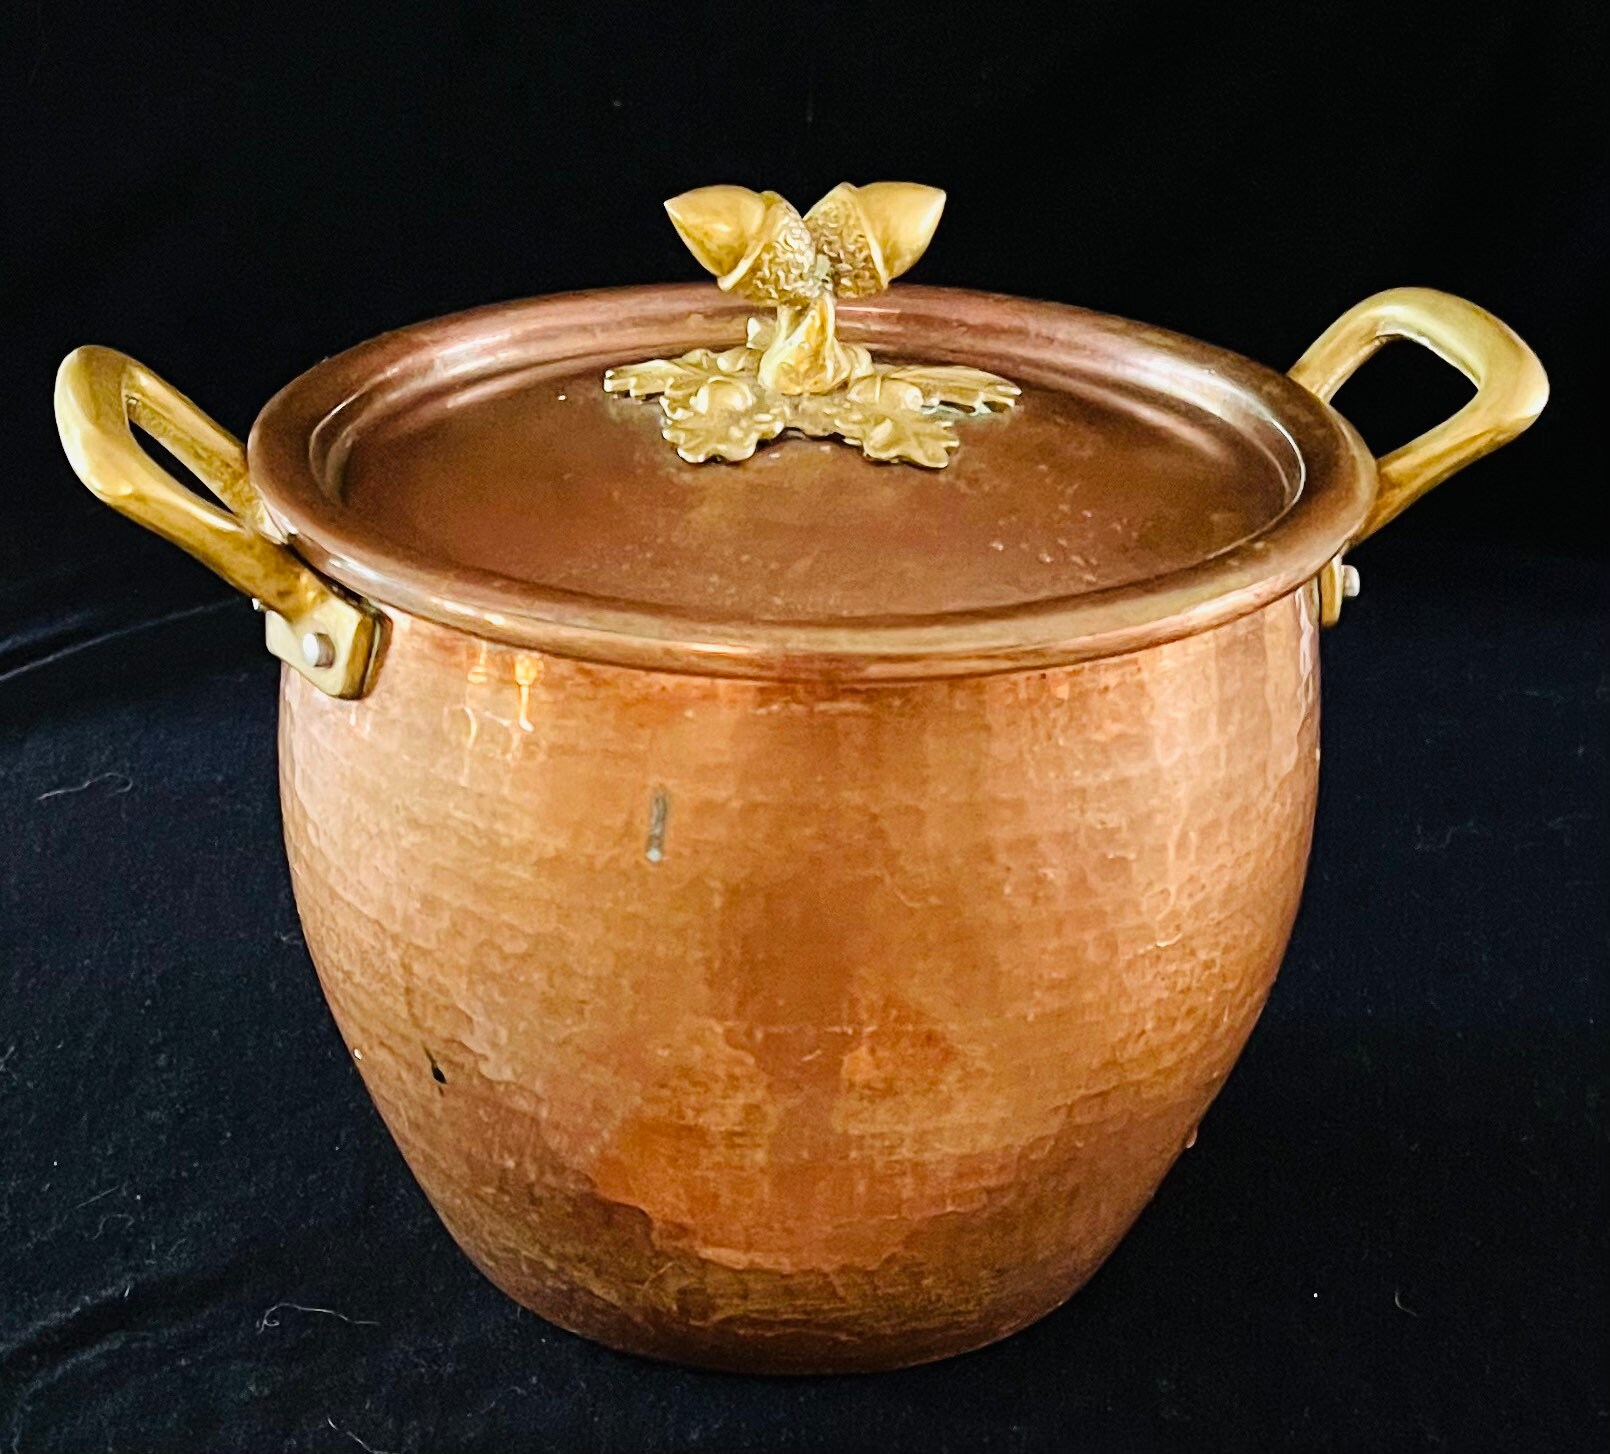 Ruffoni Historia Copper 7-Piece Cookware Set with Acorn Finials